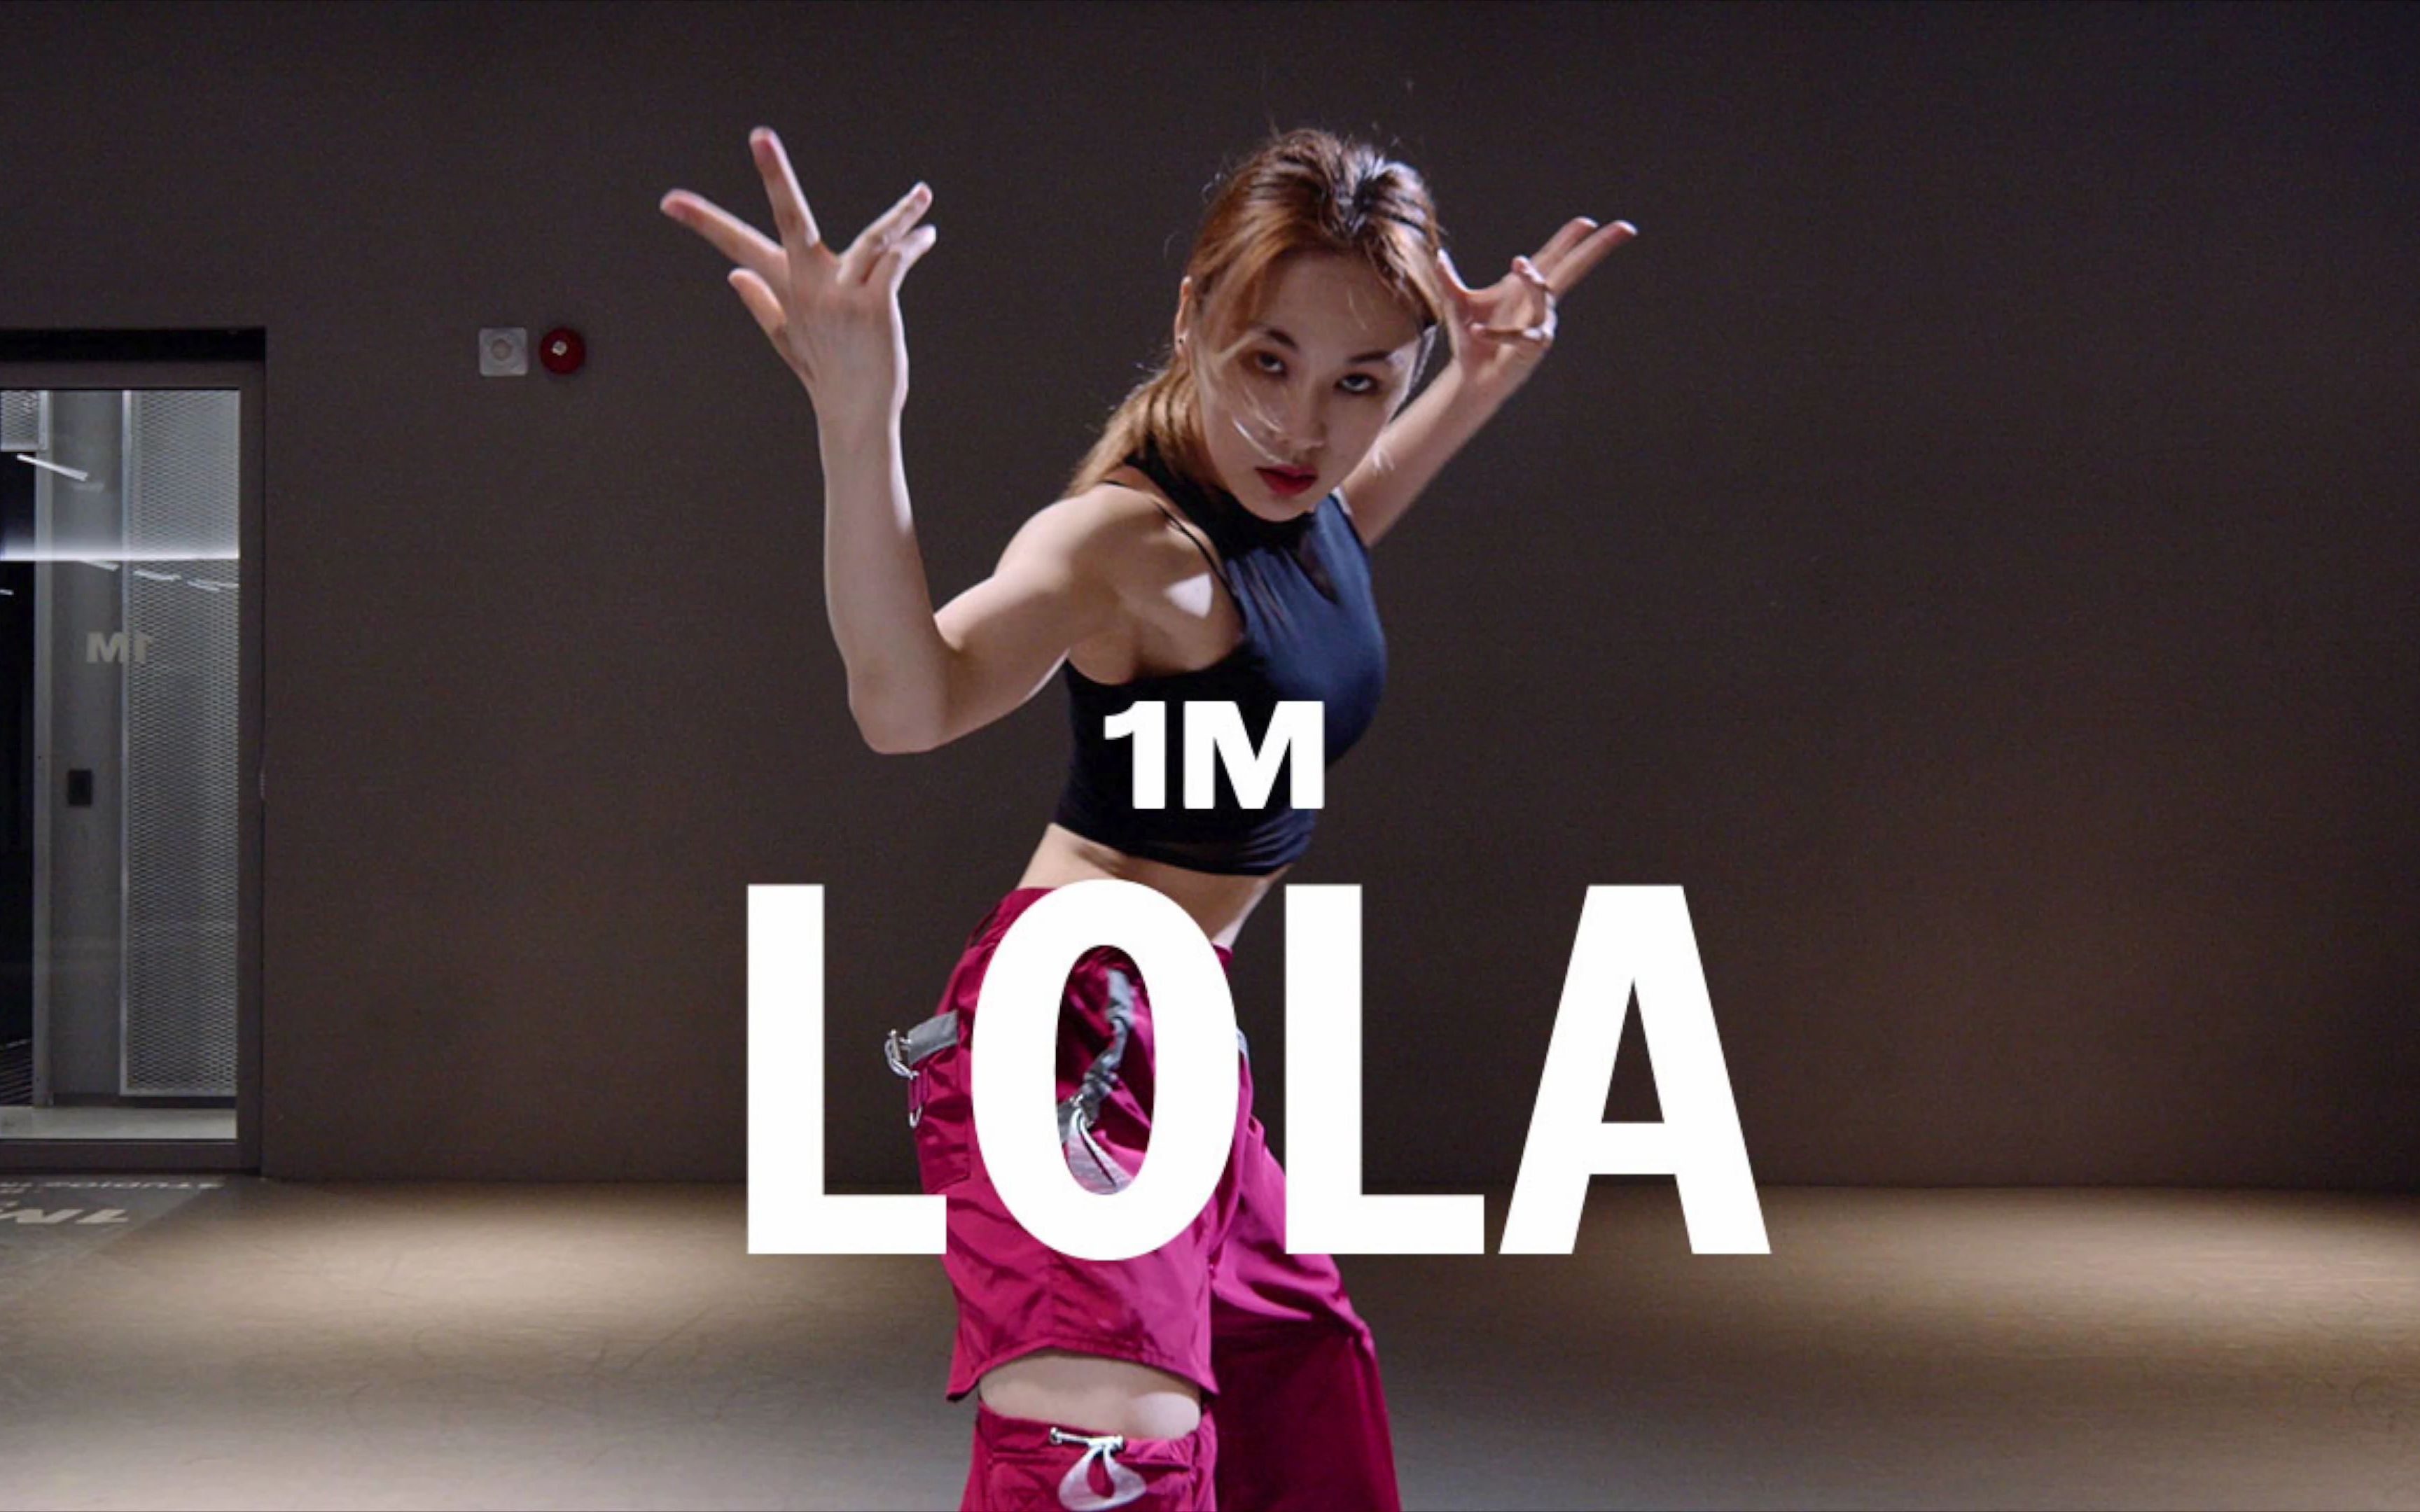 【1M】Debby 编舞《Lola》